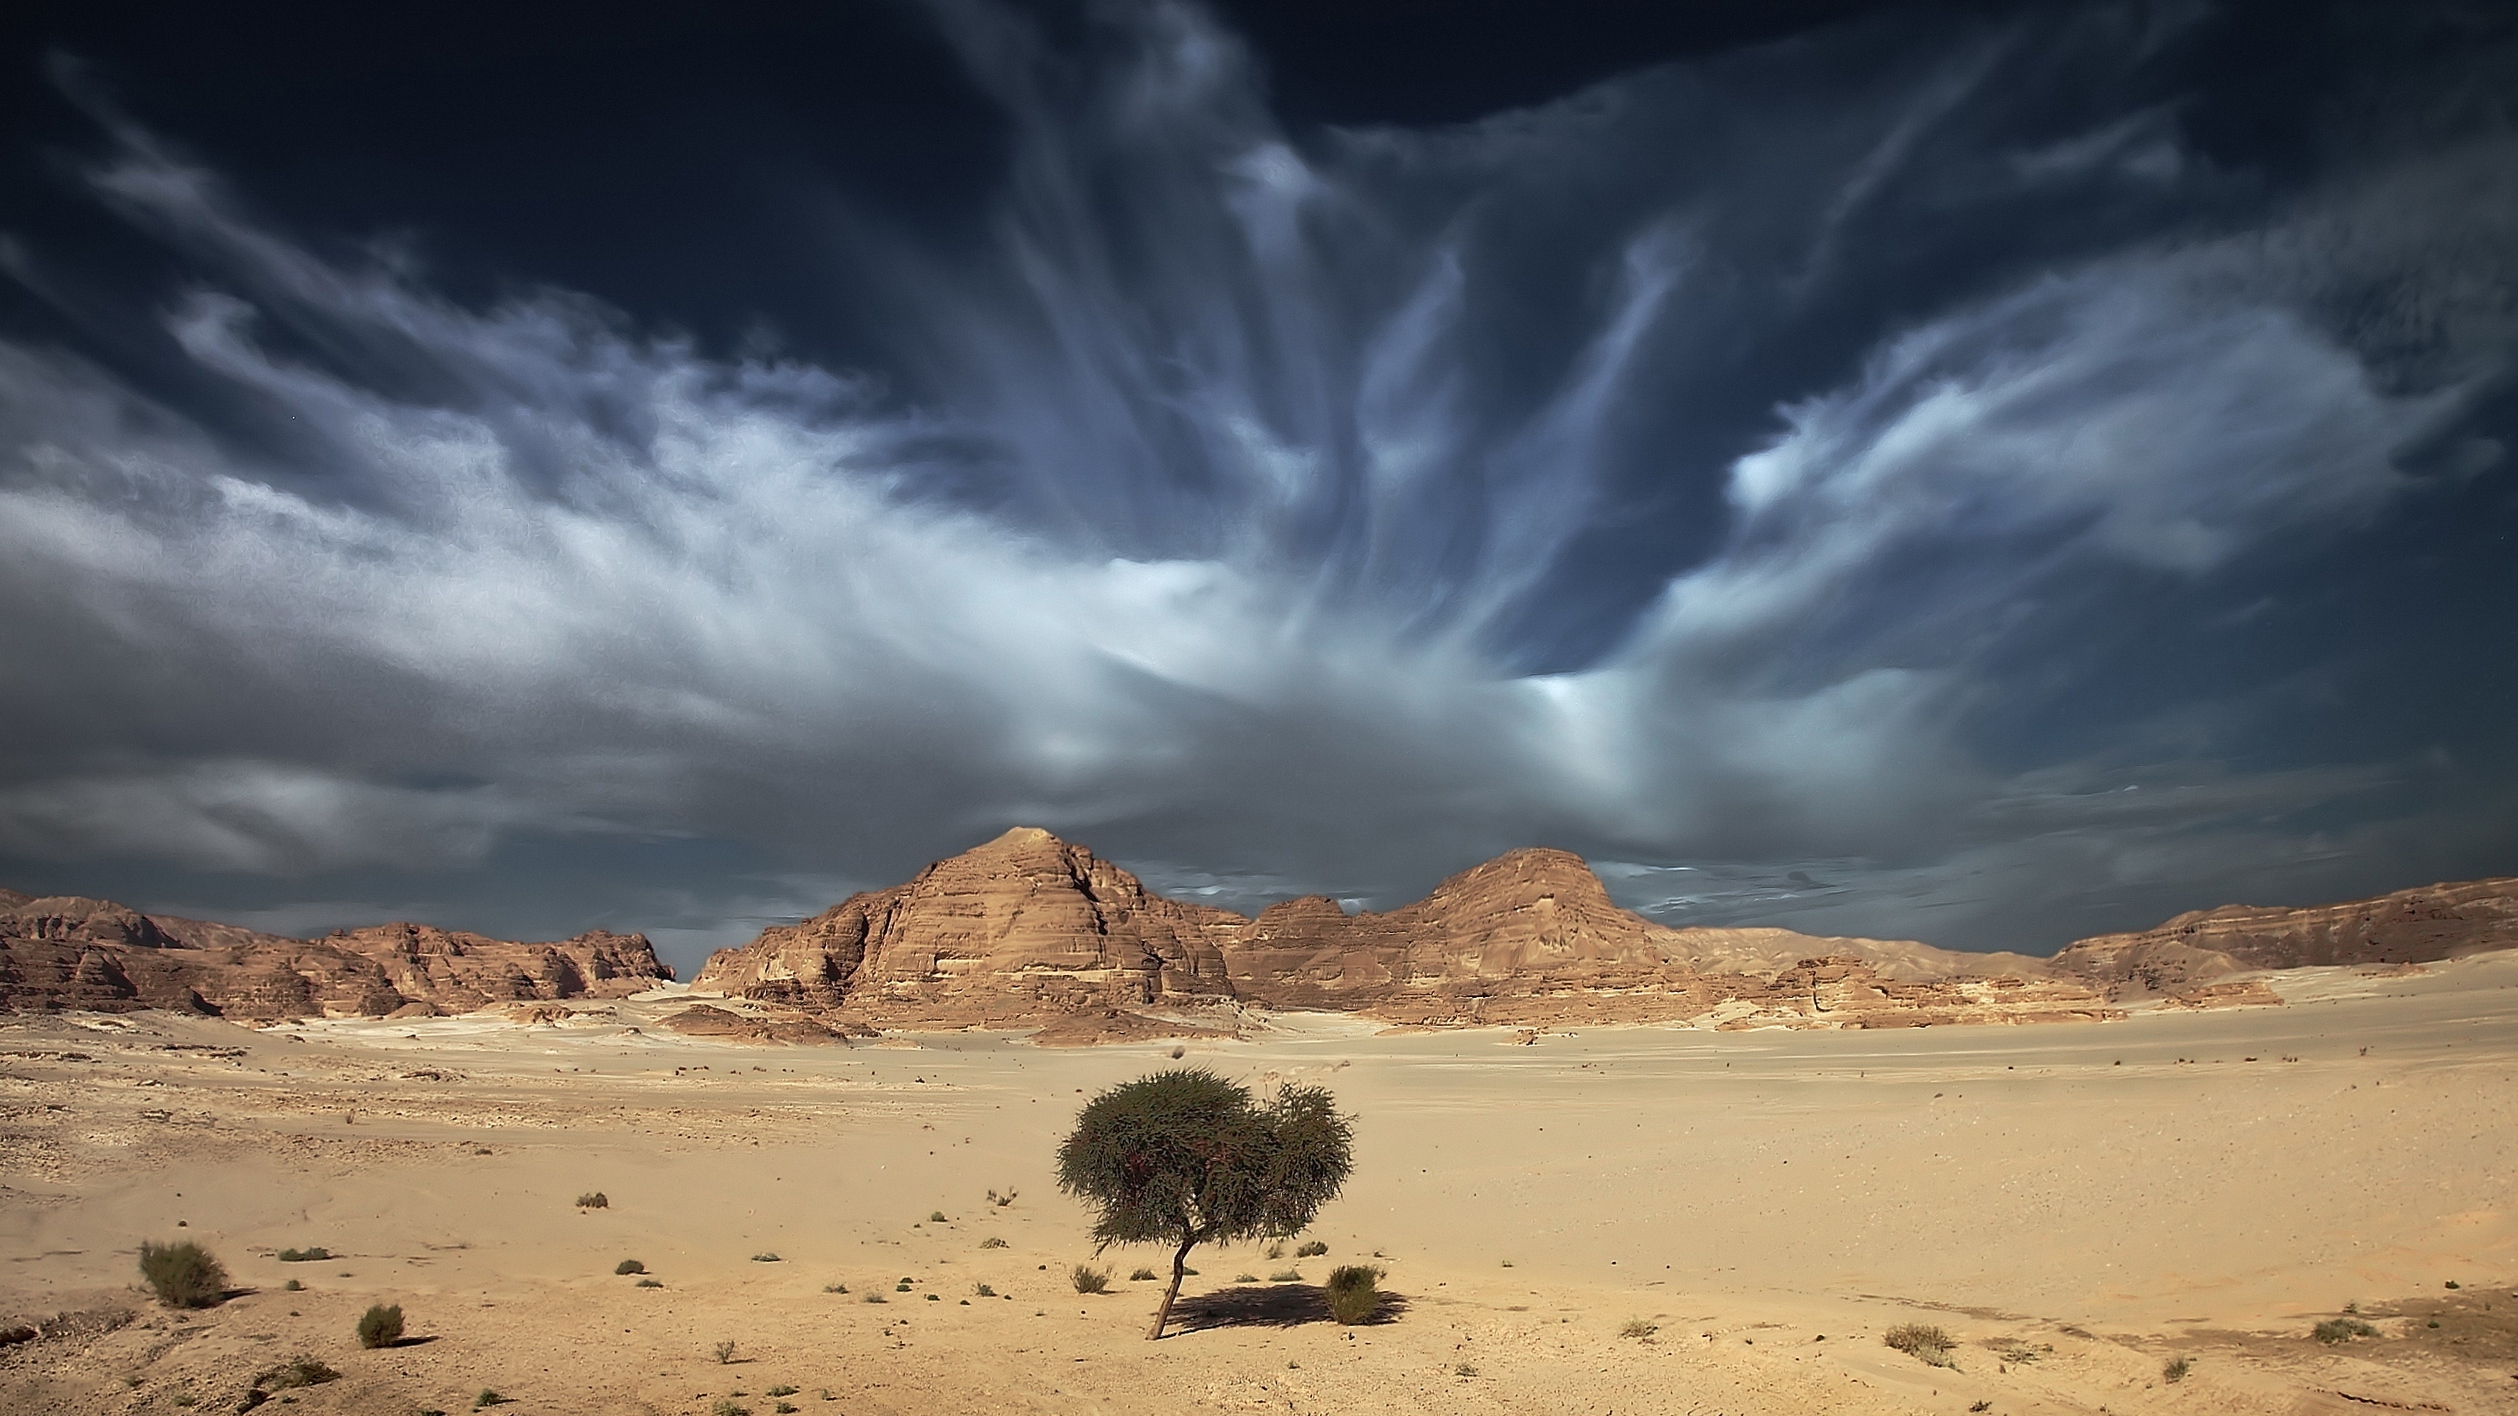 Descarga gratuita de fondo de pantalla para móvil de Arena, Desierto, Árbol, Nube, Tierra/naturaleza.